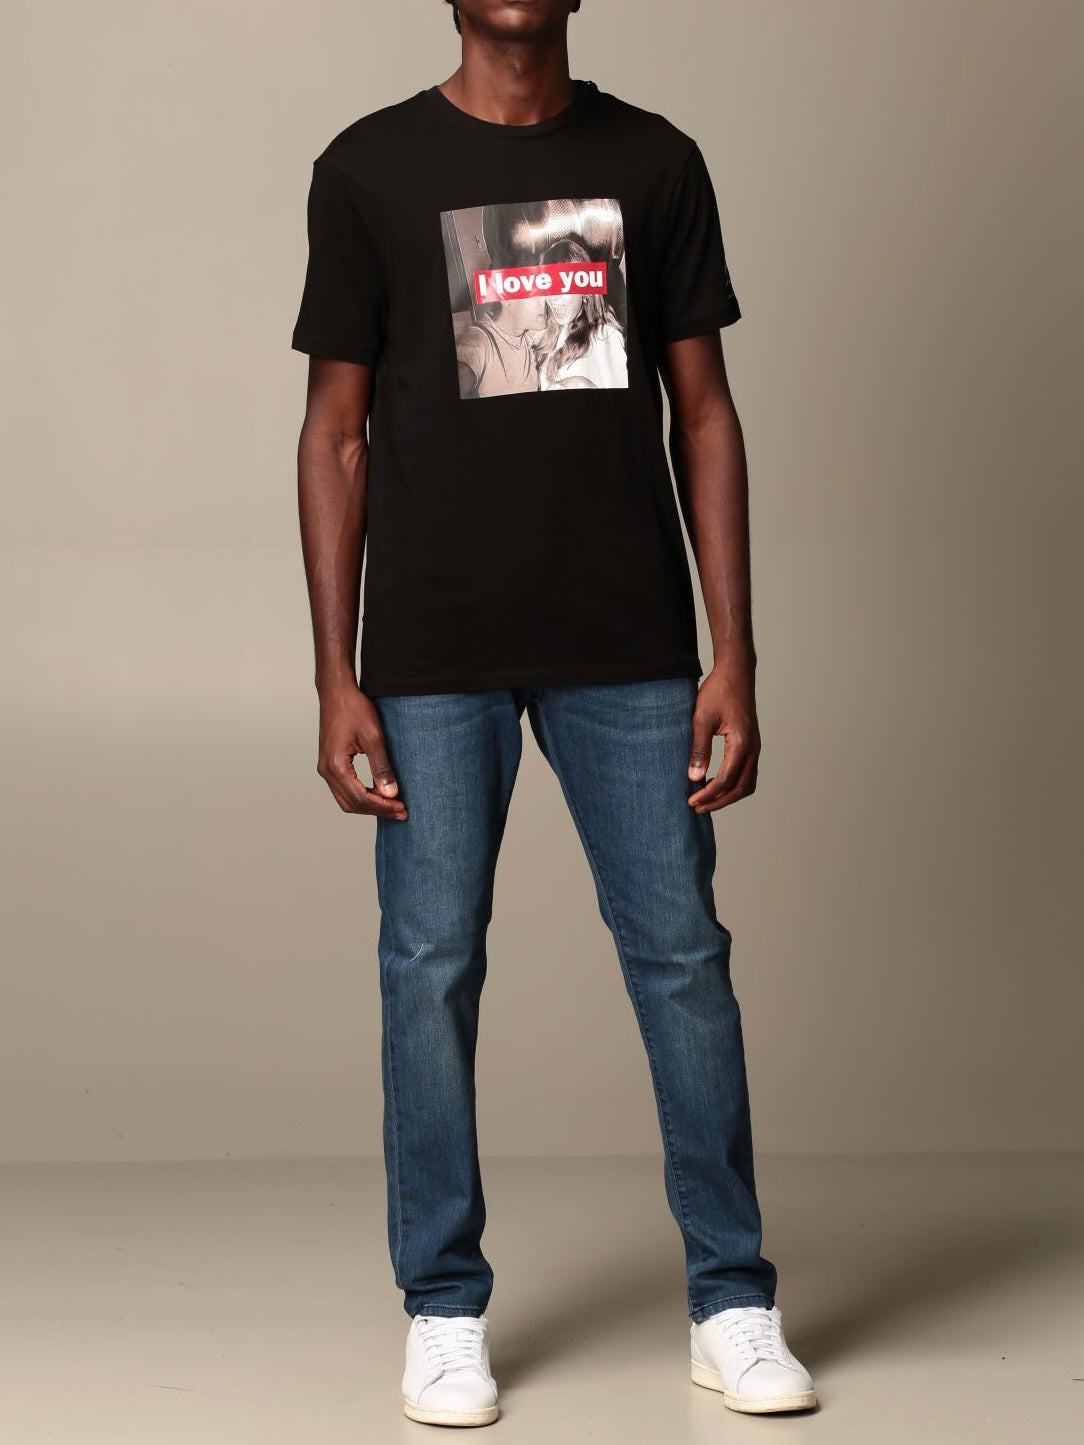 Armani Exchange T-shirt, I Love You Print, UNISEX, Black, S & M